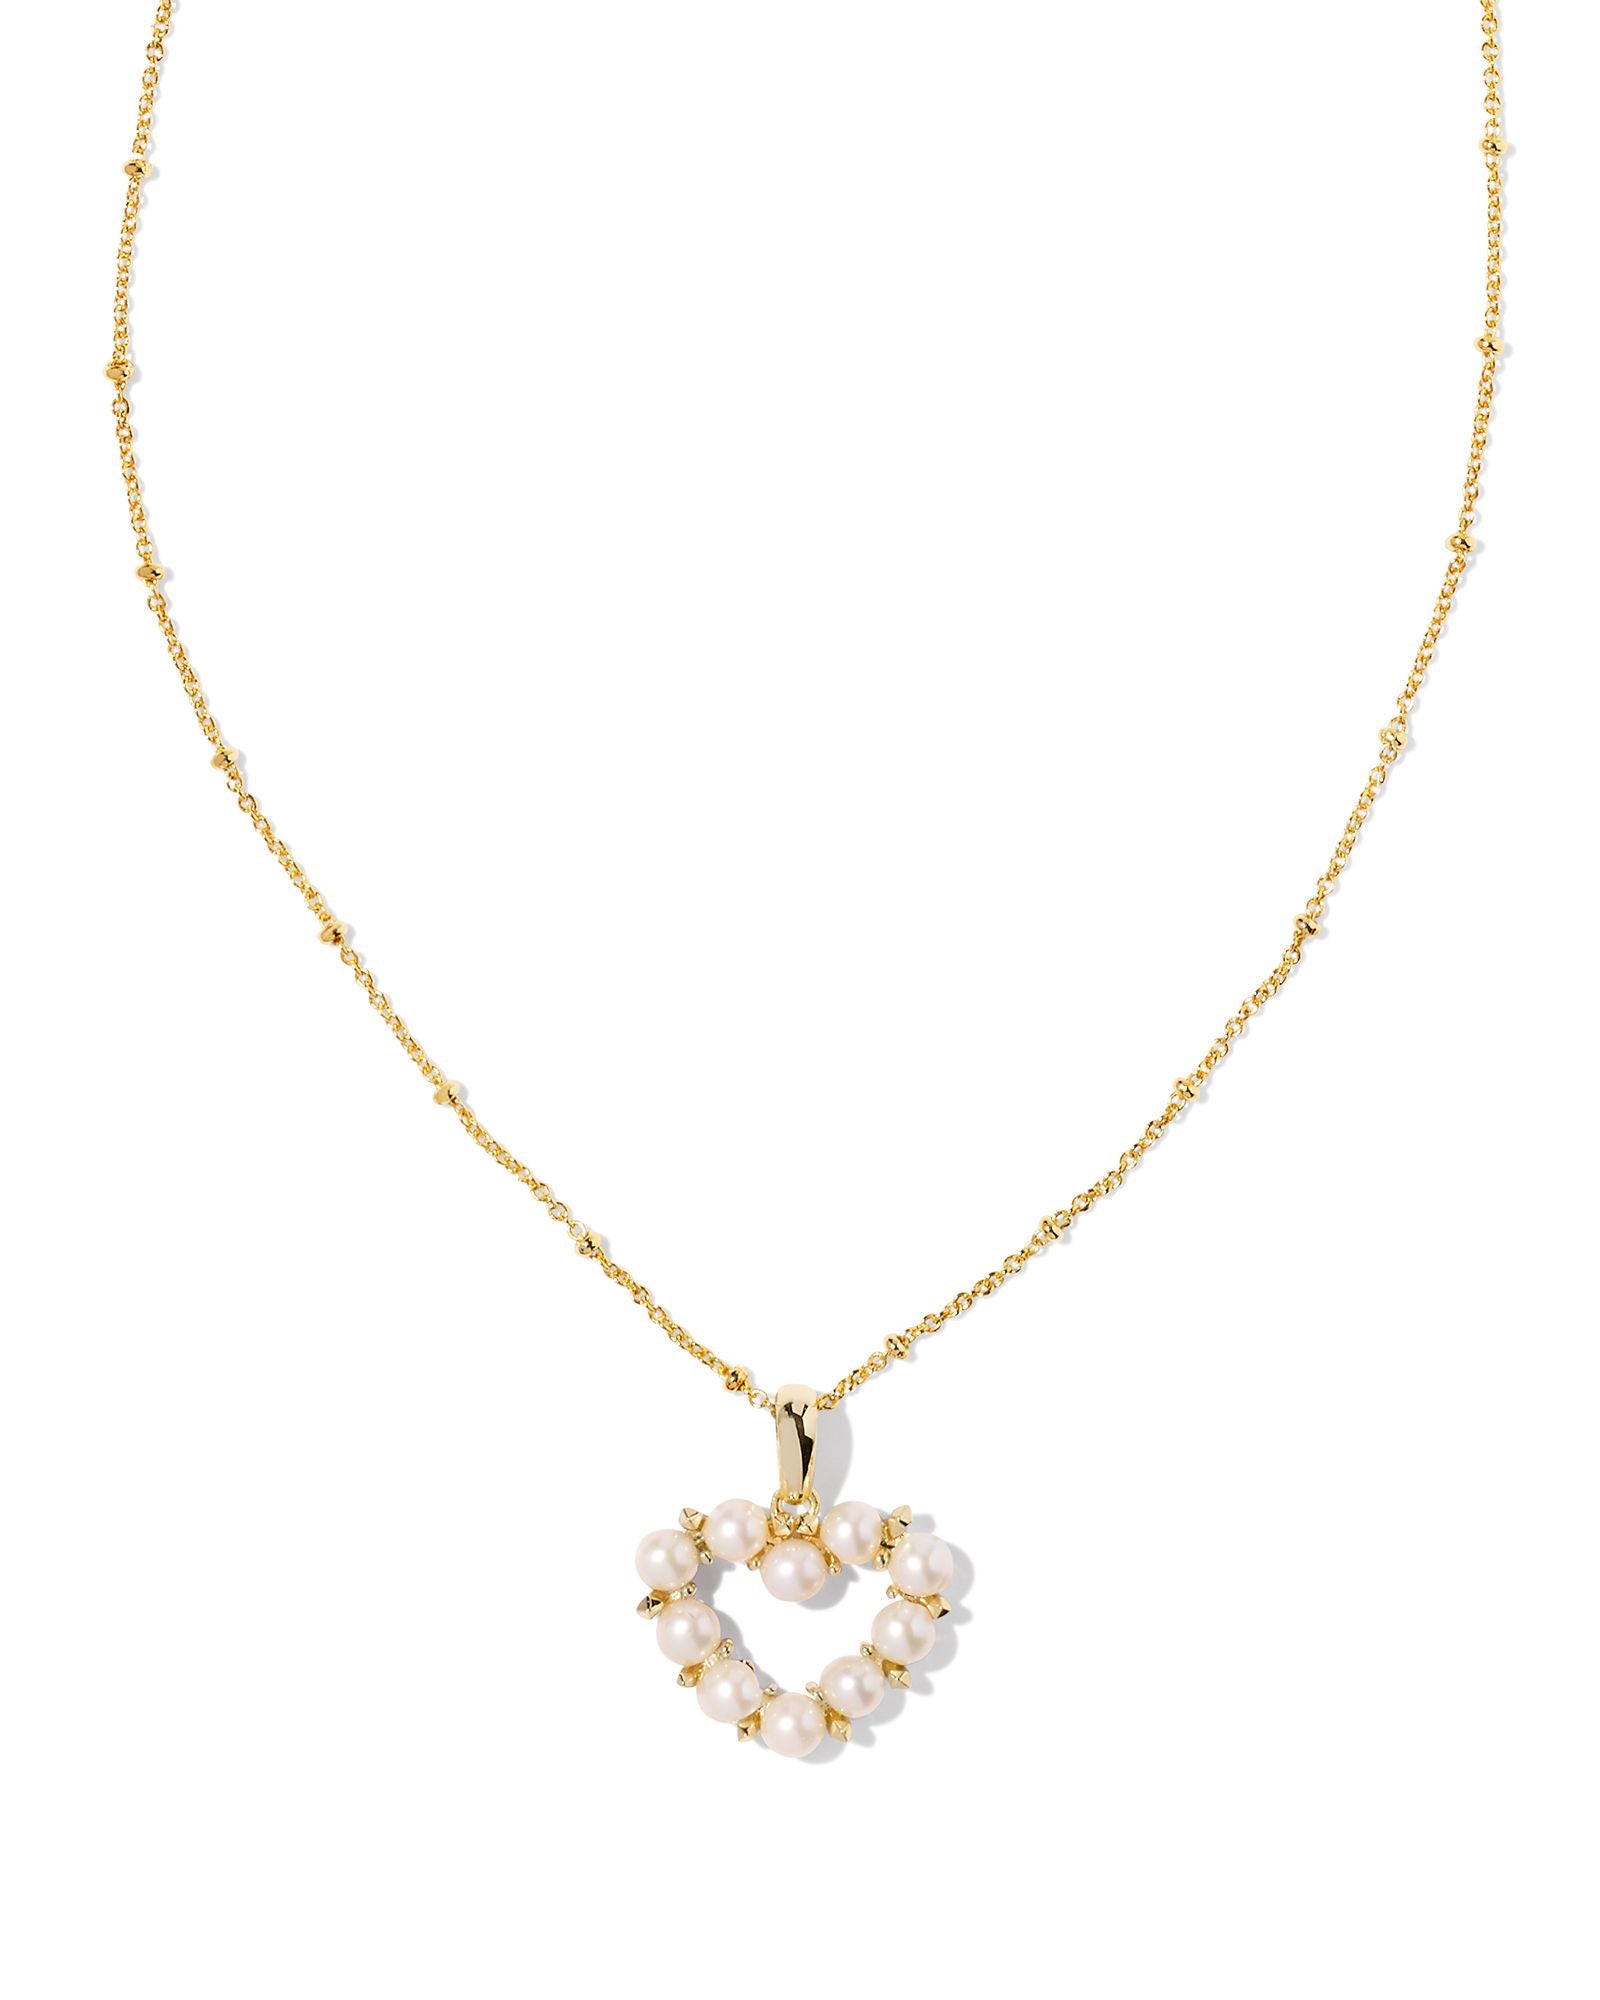 Ashton Heart Pendant Necklace in Gold White Pearl